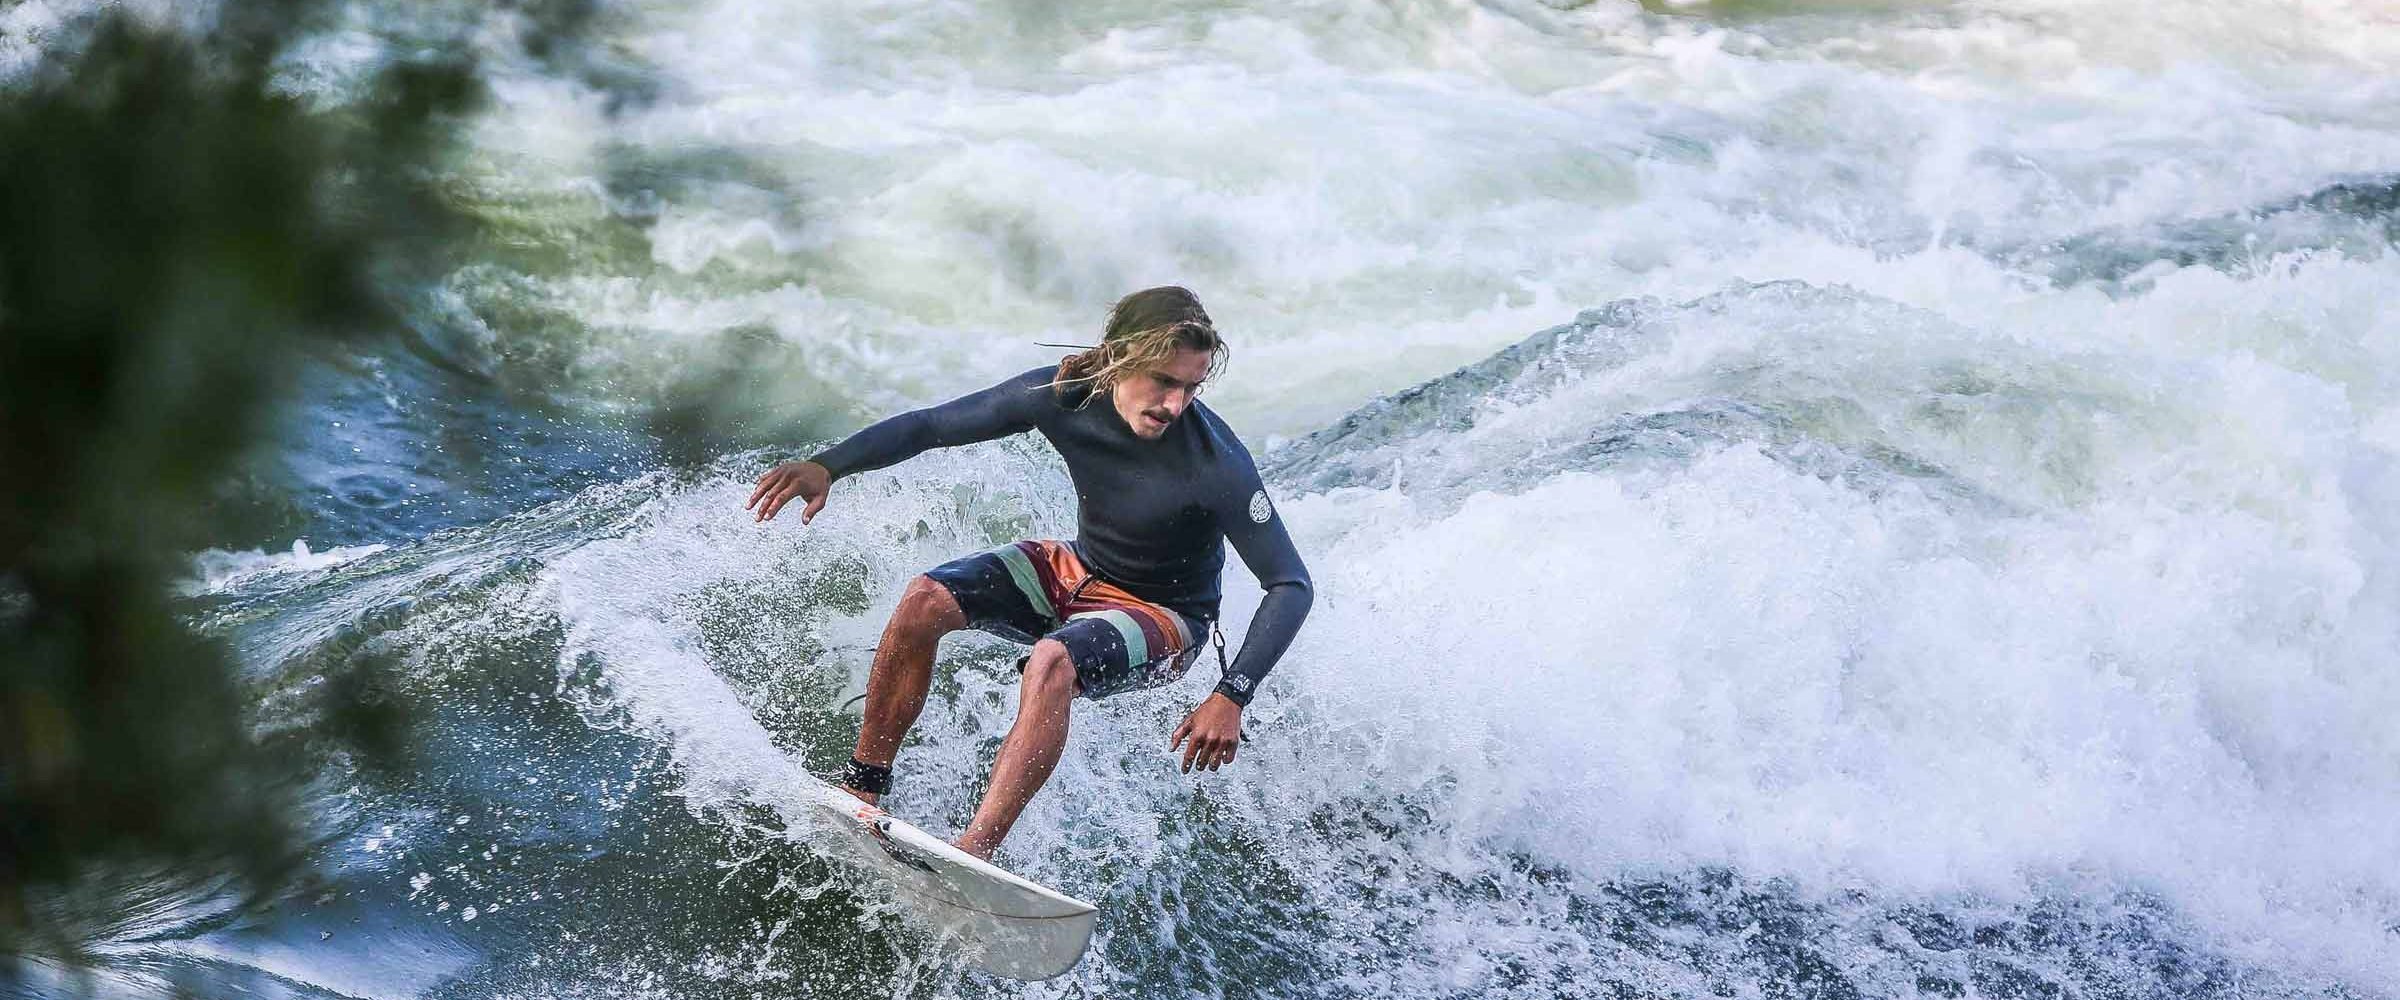 River-Surfing-Credit-photo-Mike-Hitelman